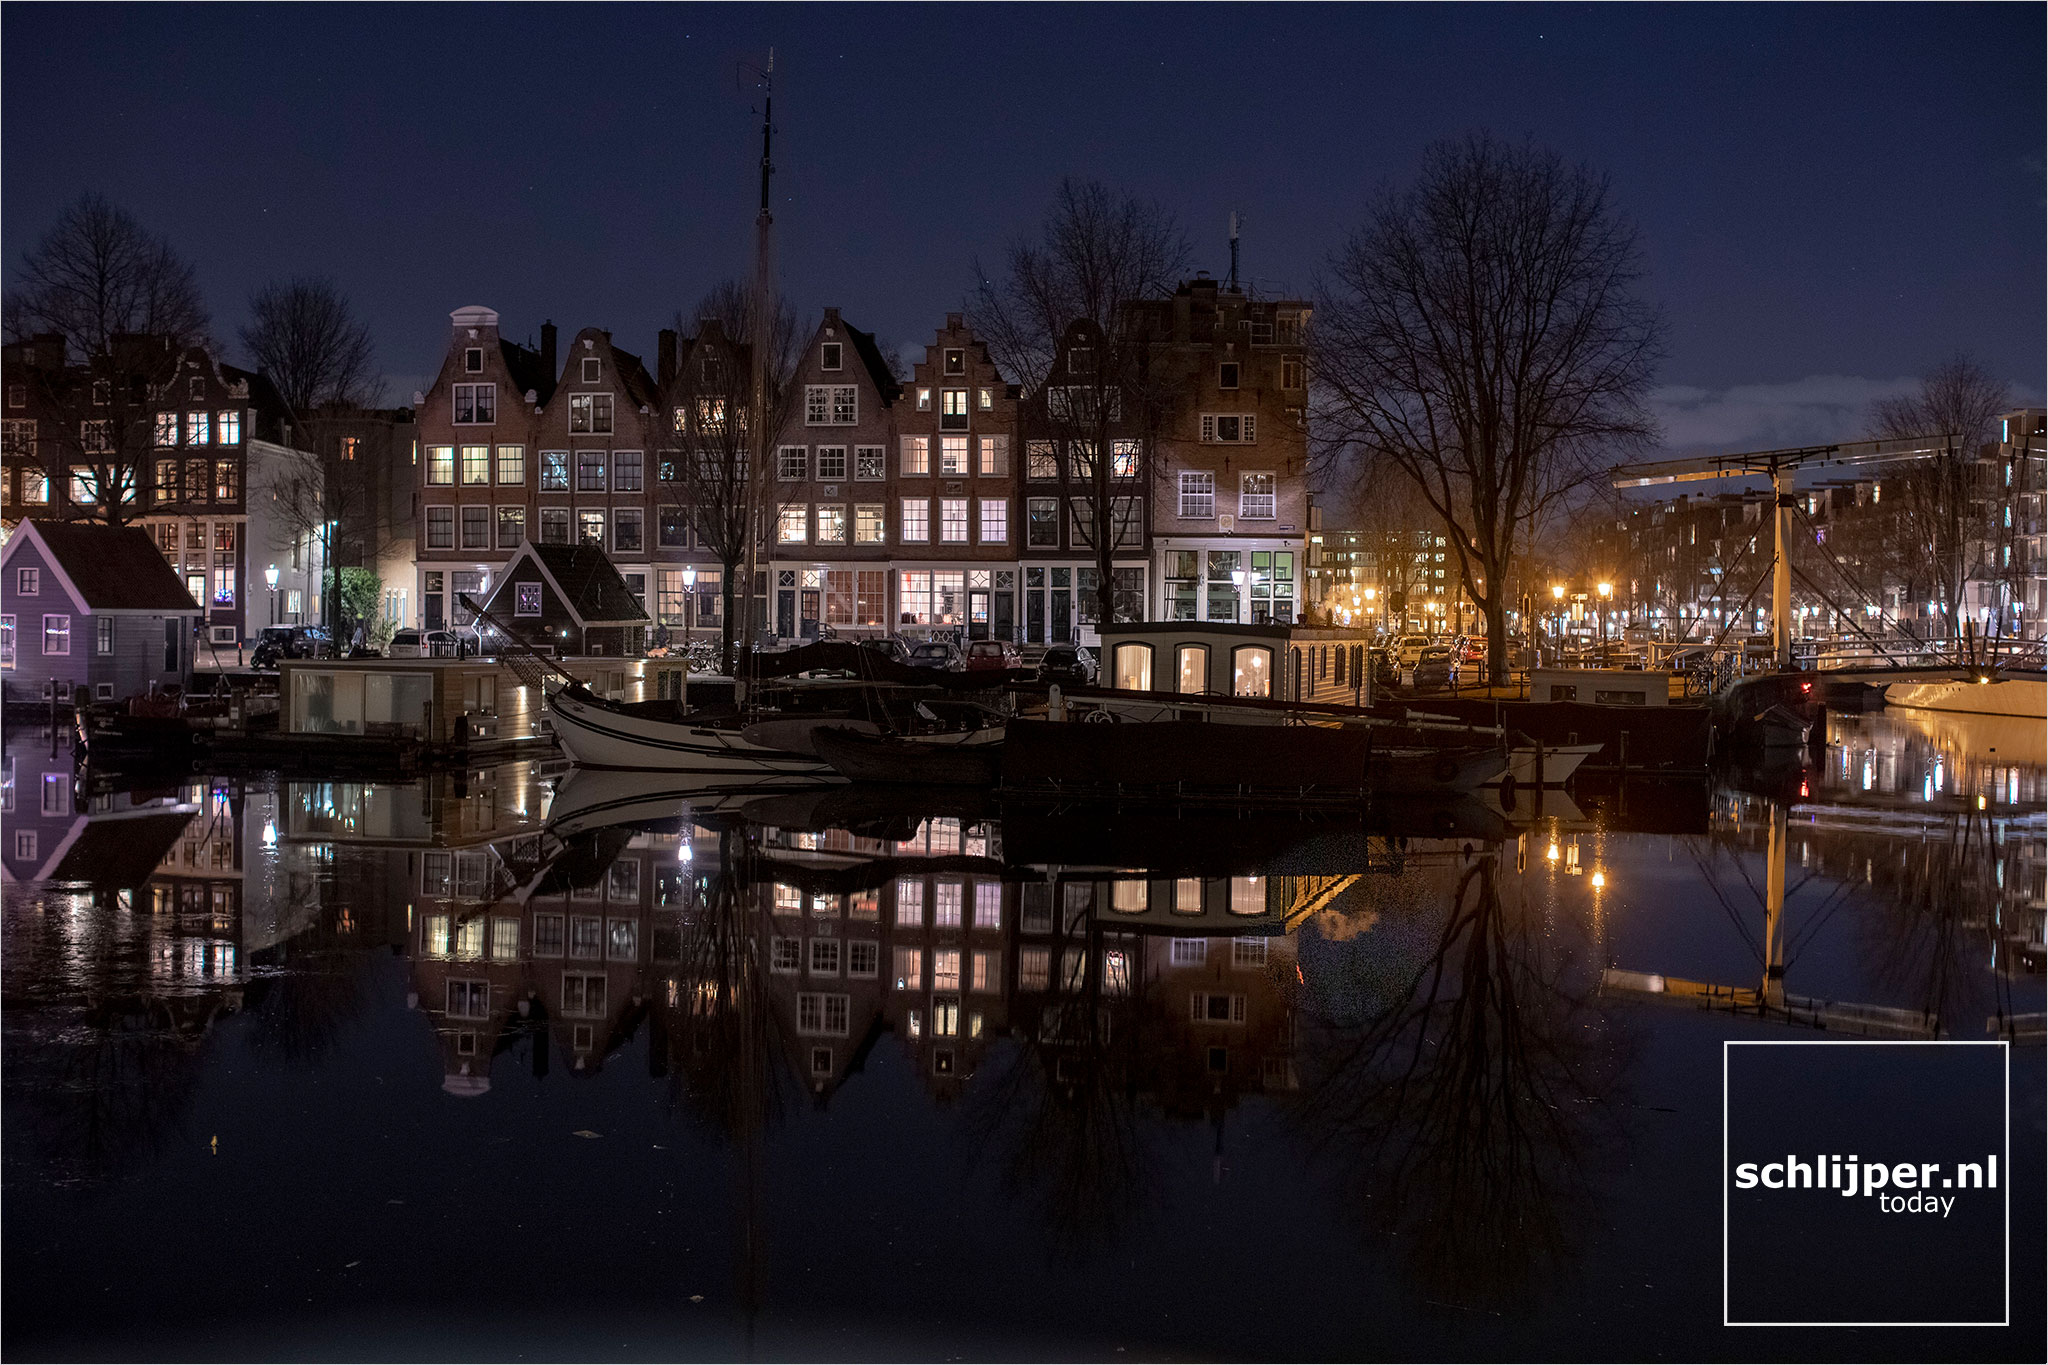 The Netherlands, Amsterdam, 9 januari 2021